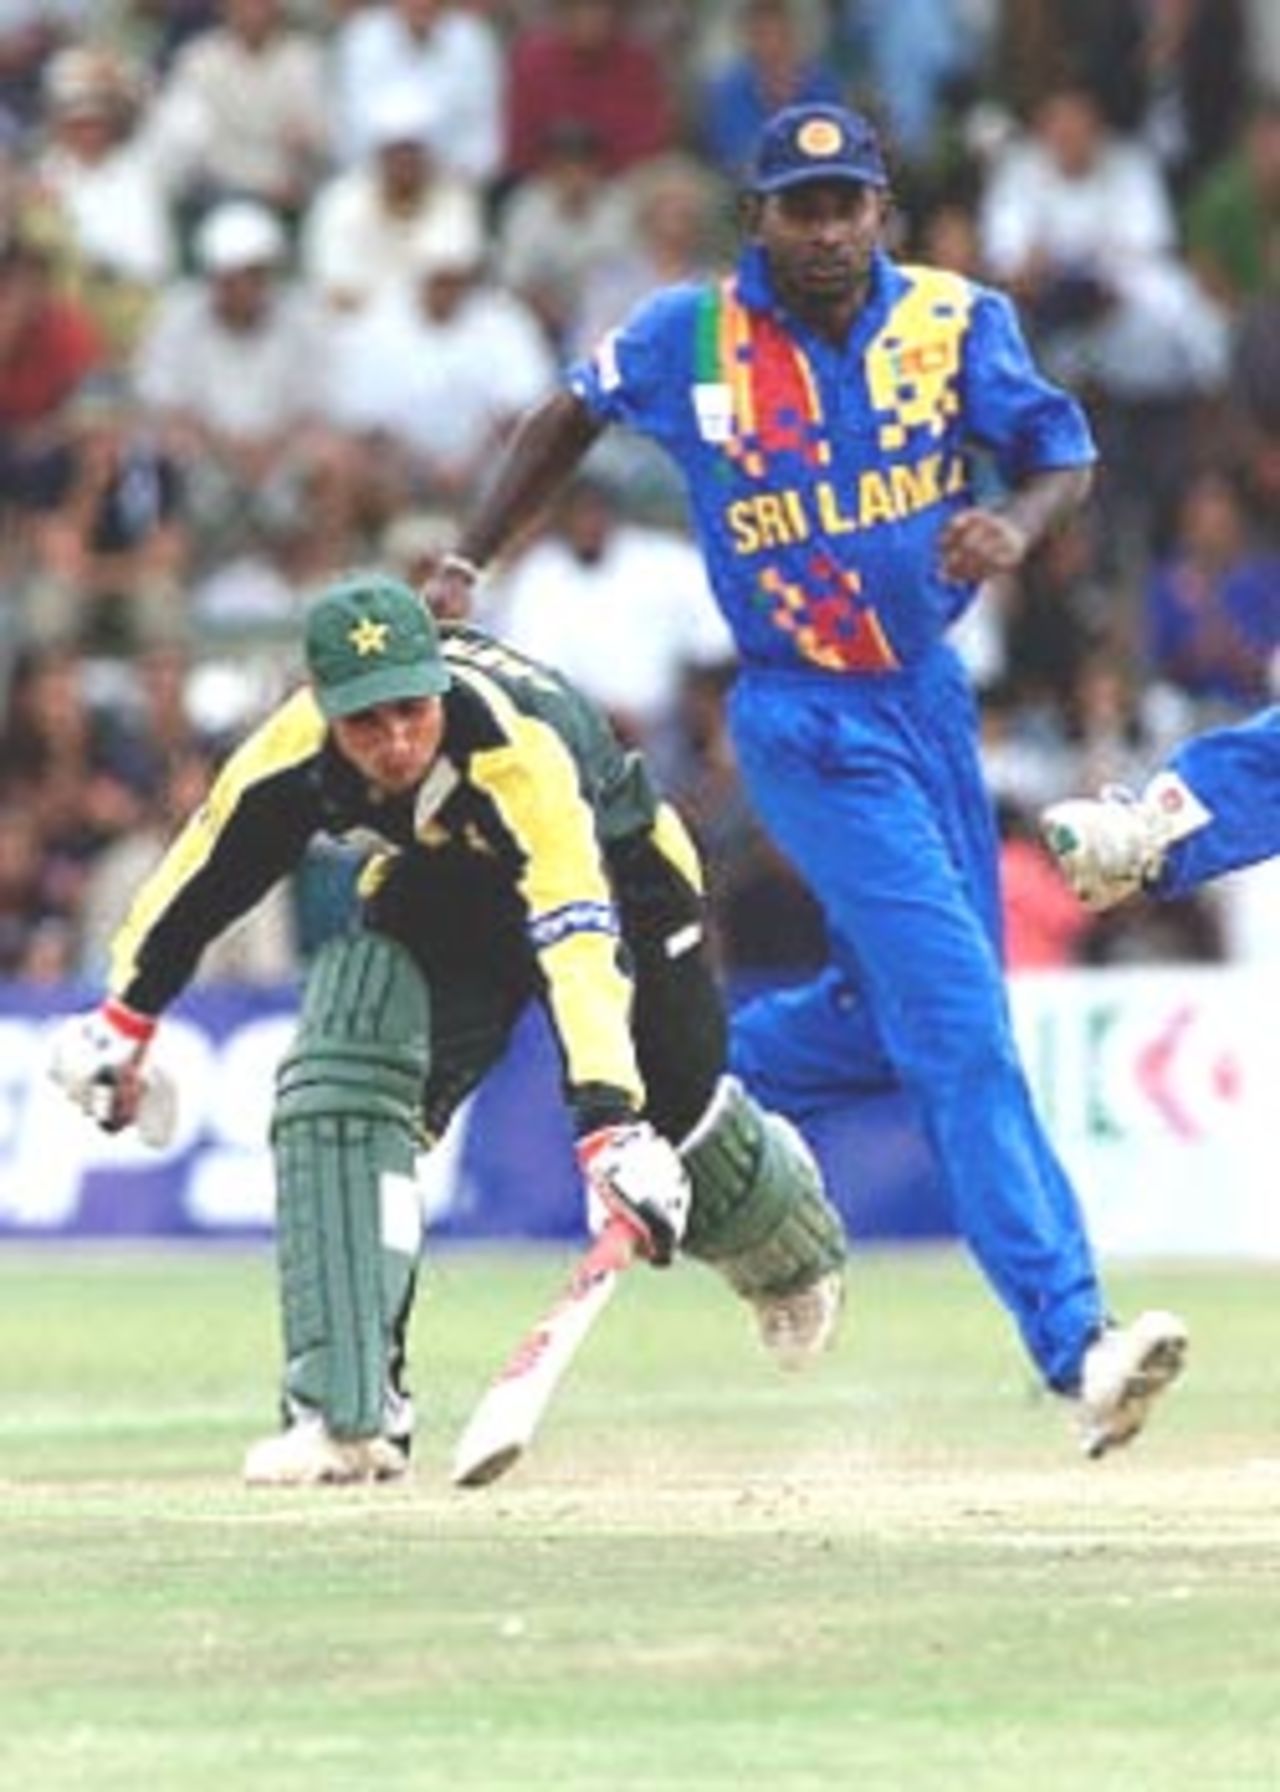 Imran Nazir makes a dash for the crease even as the Lankan fielders look on. ICC KnockOut 2000/01, 2nd Quarter Final, Pakistan v Sri Lanka Gymkhana Club Ground, Nairobi, 08 Oct 2000